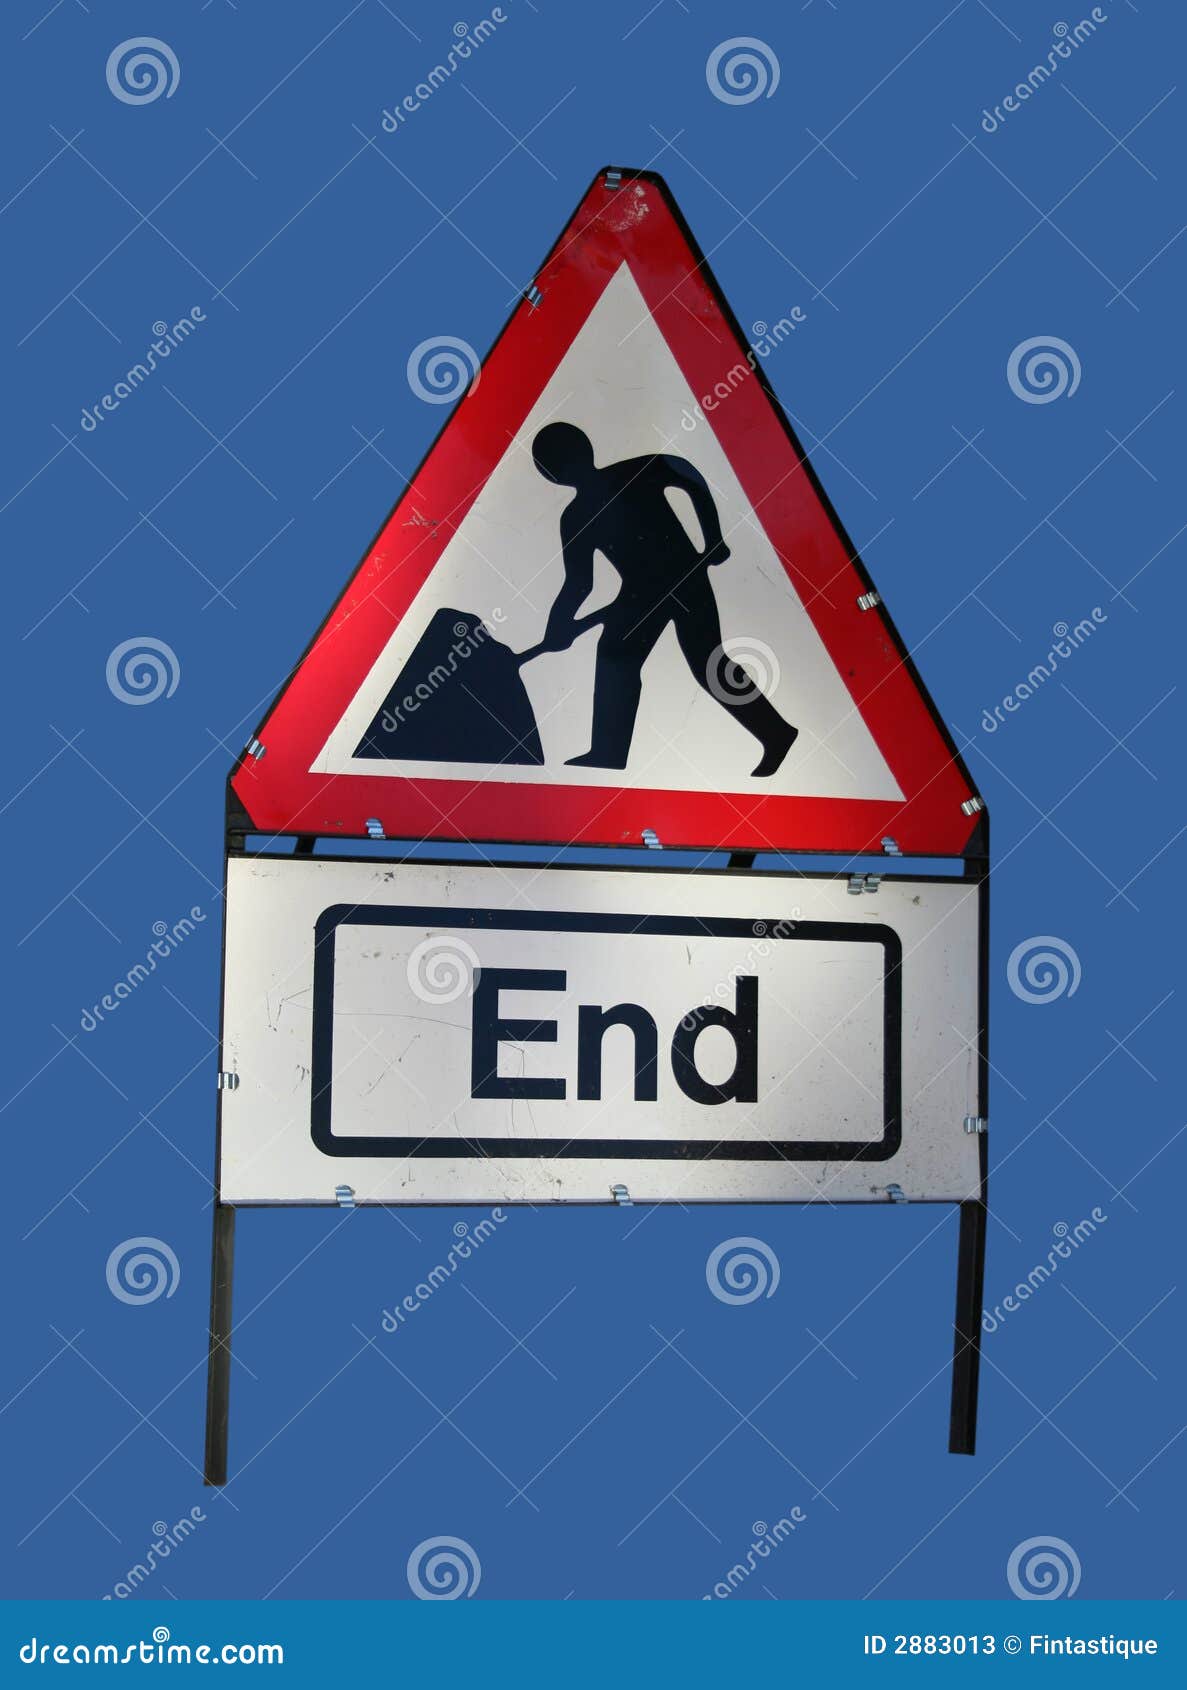 end of roadworks sign